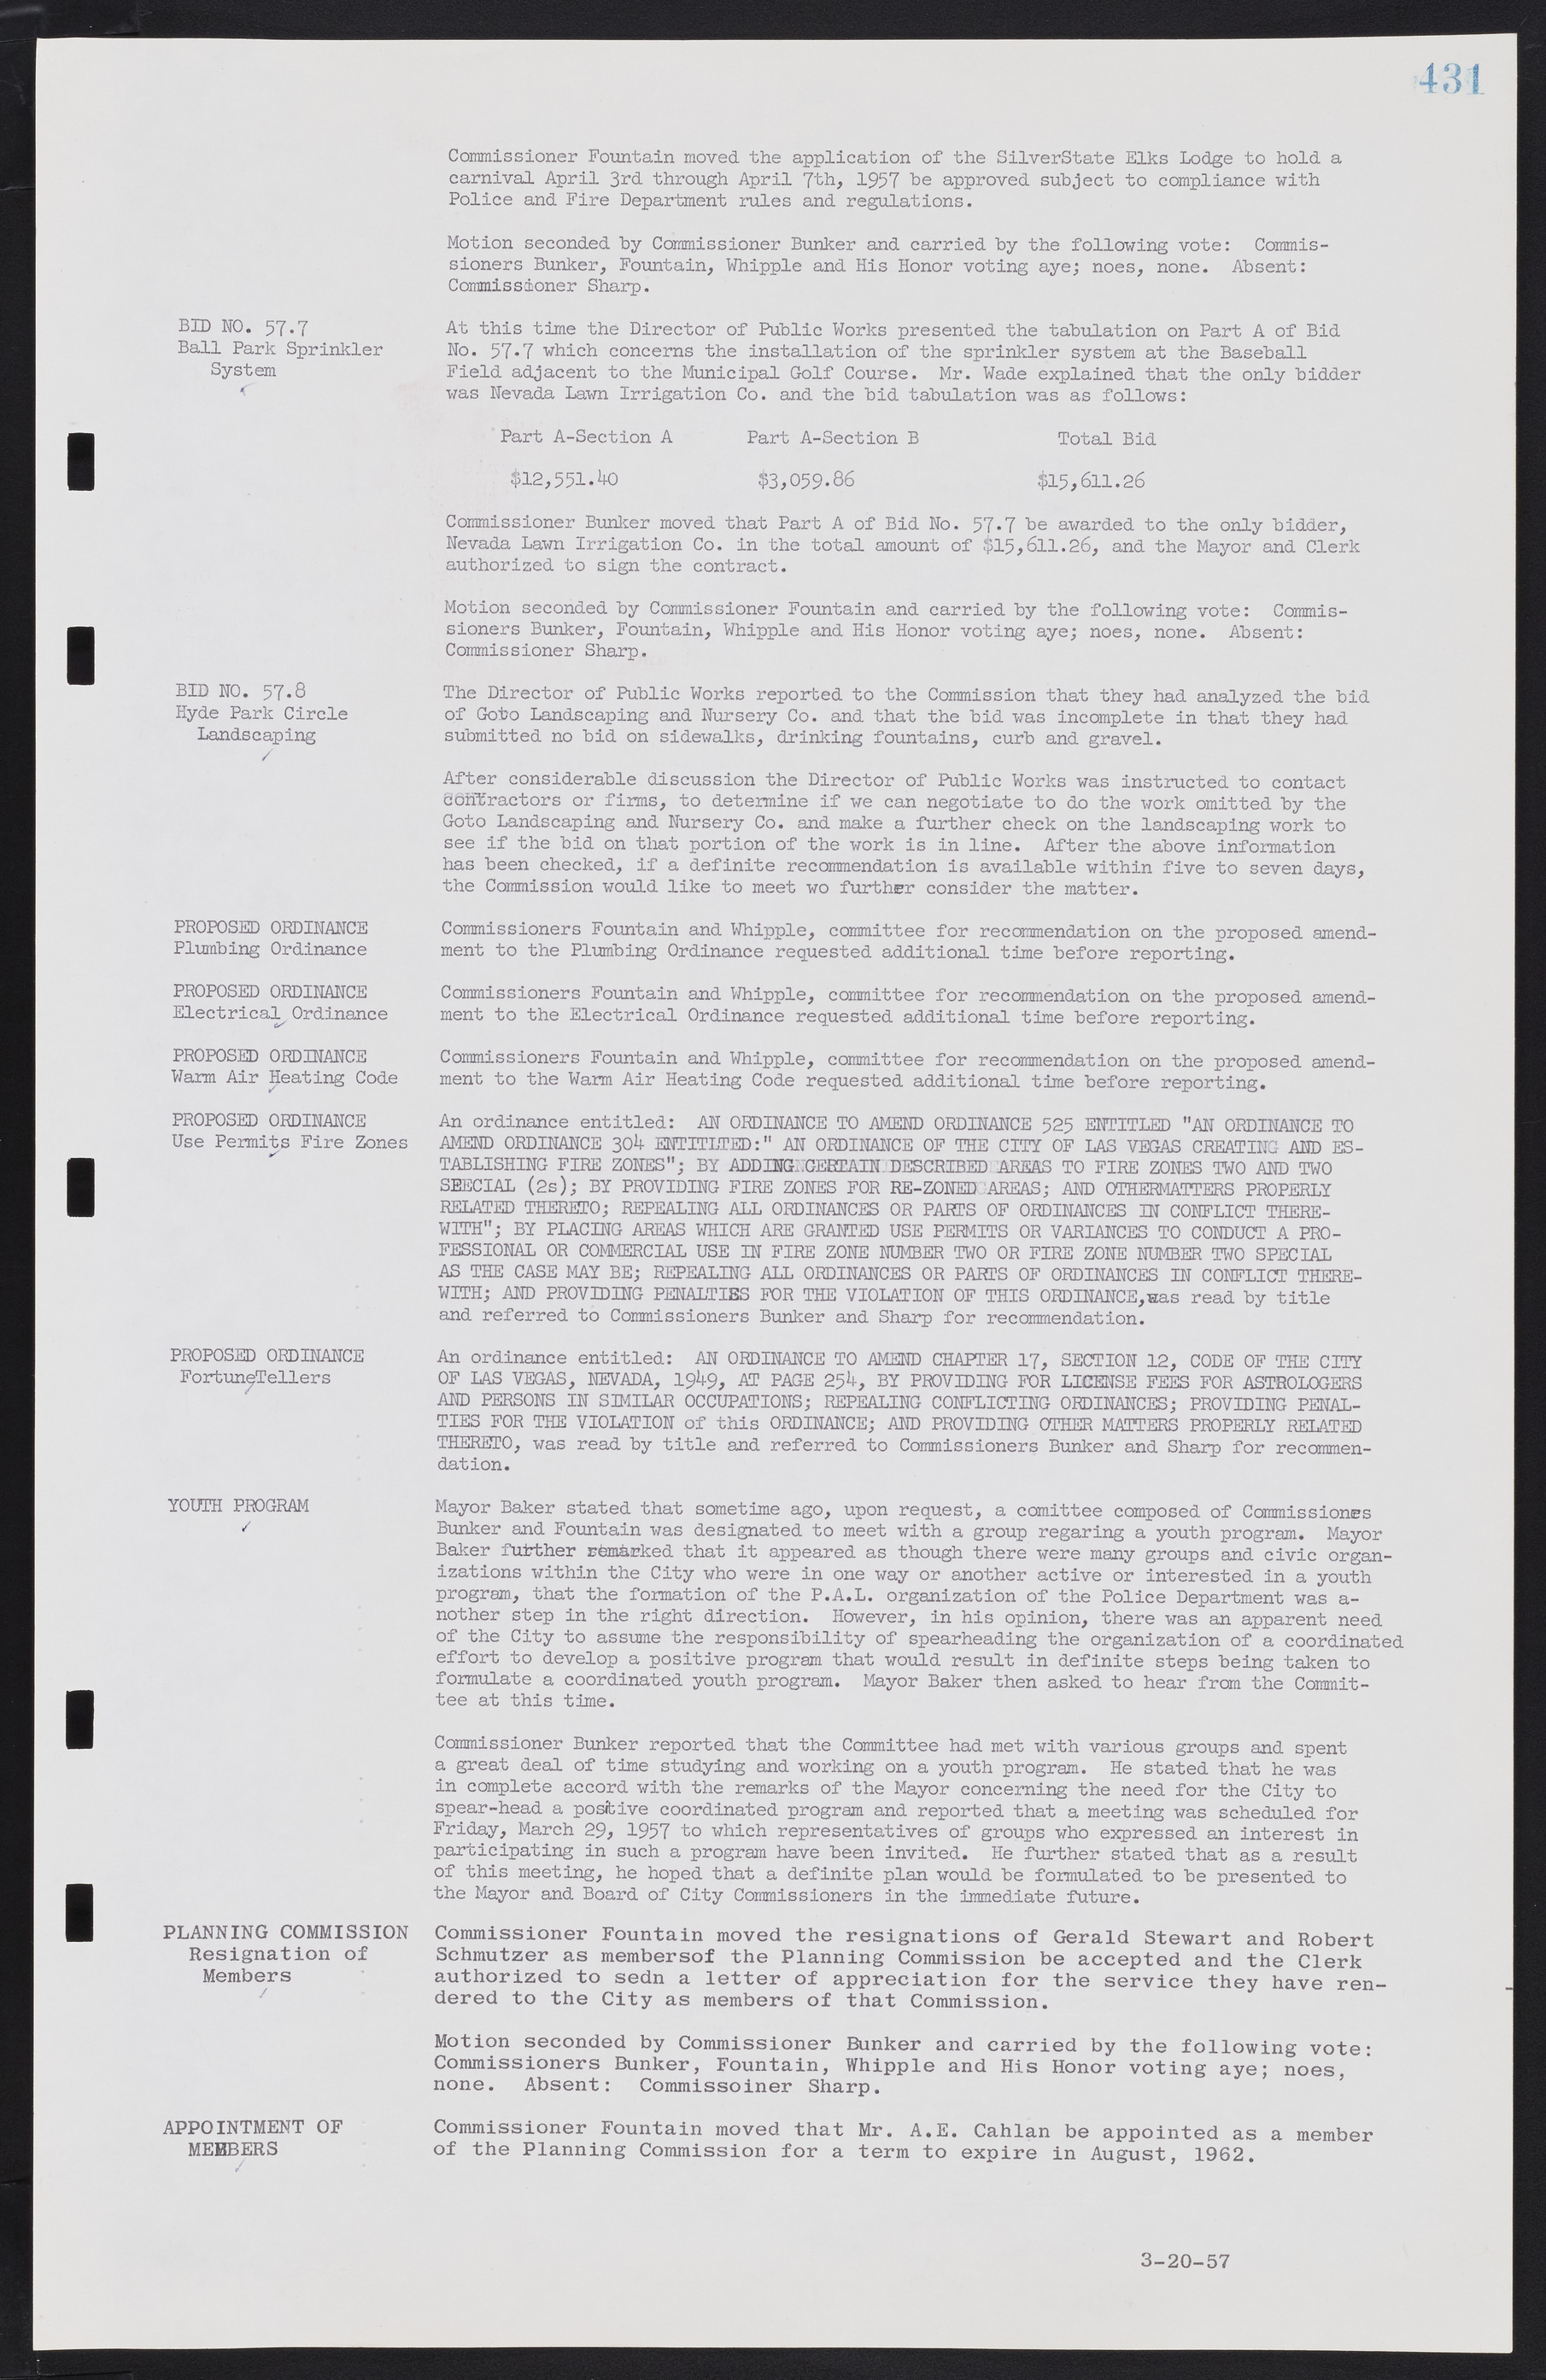 Las Vegas City Commission Minutes, September 21, 1955 to November 20, 1957, lvc000010-451